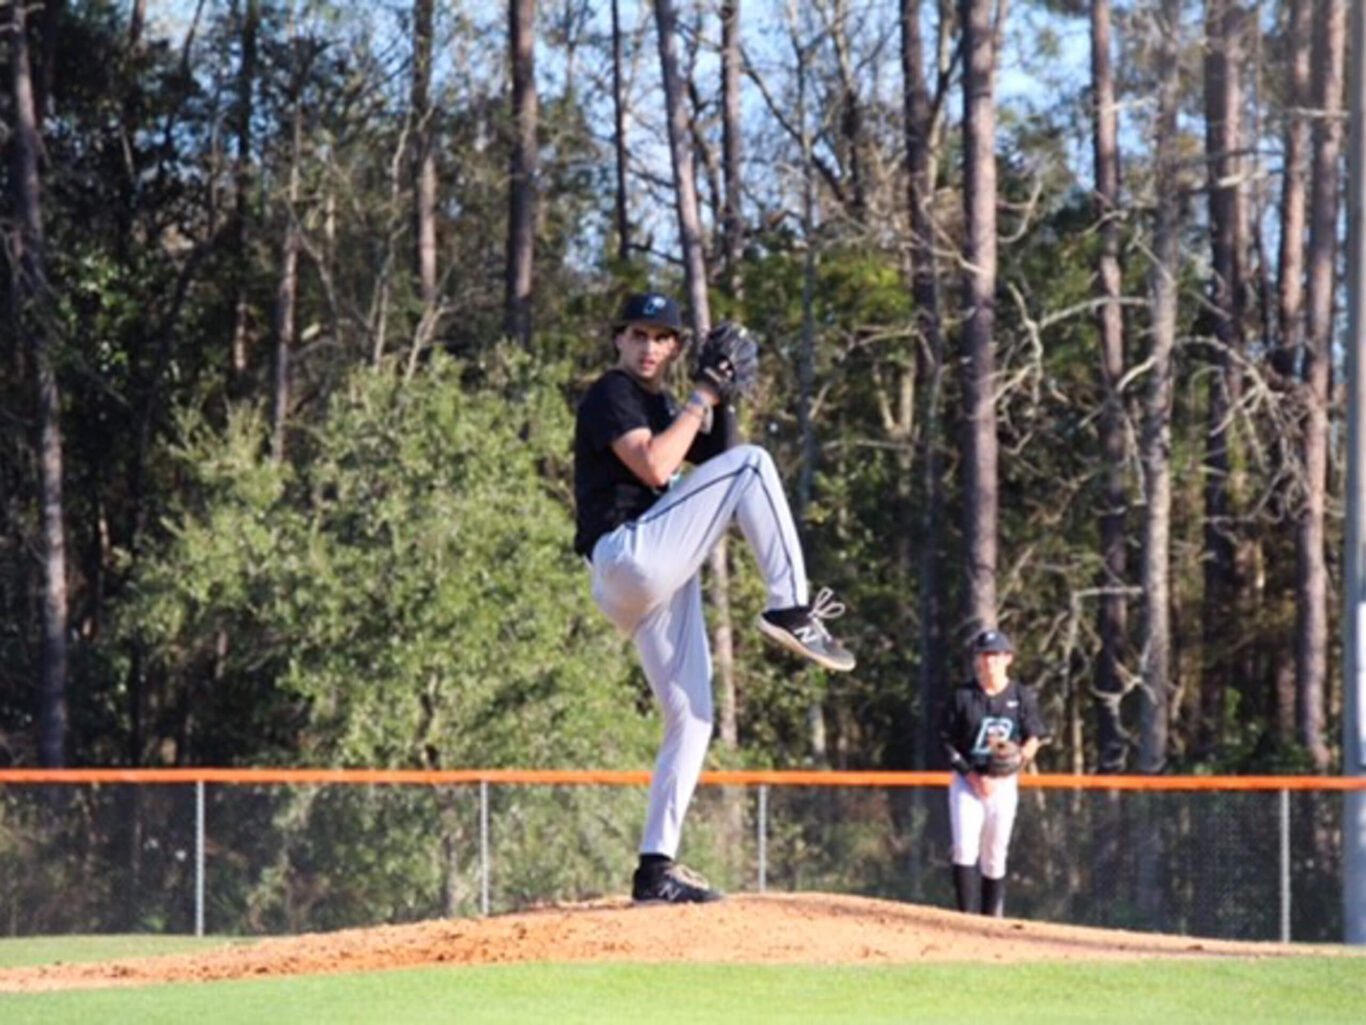 A baseball player is pitching a ball on a baseball field.